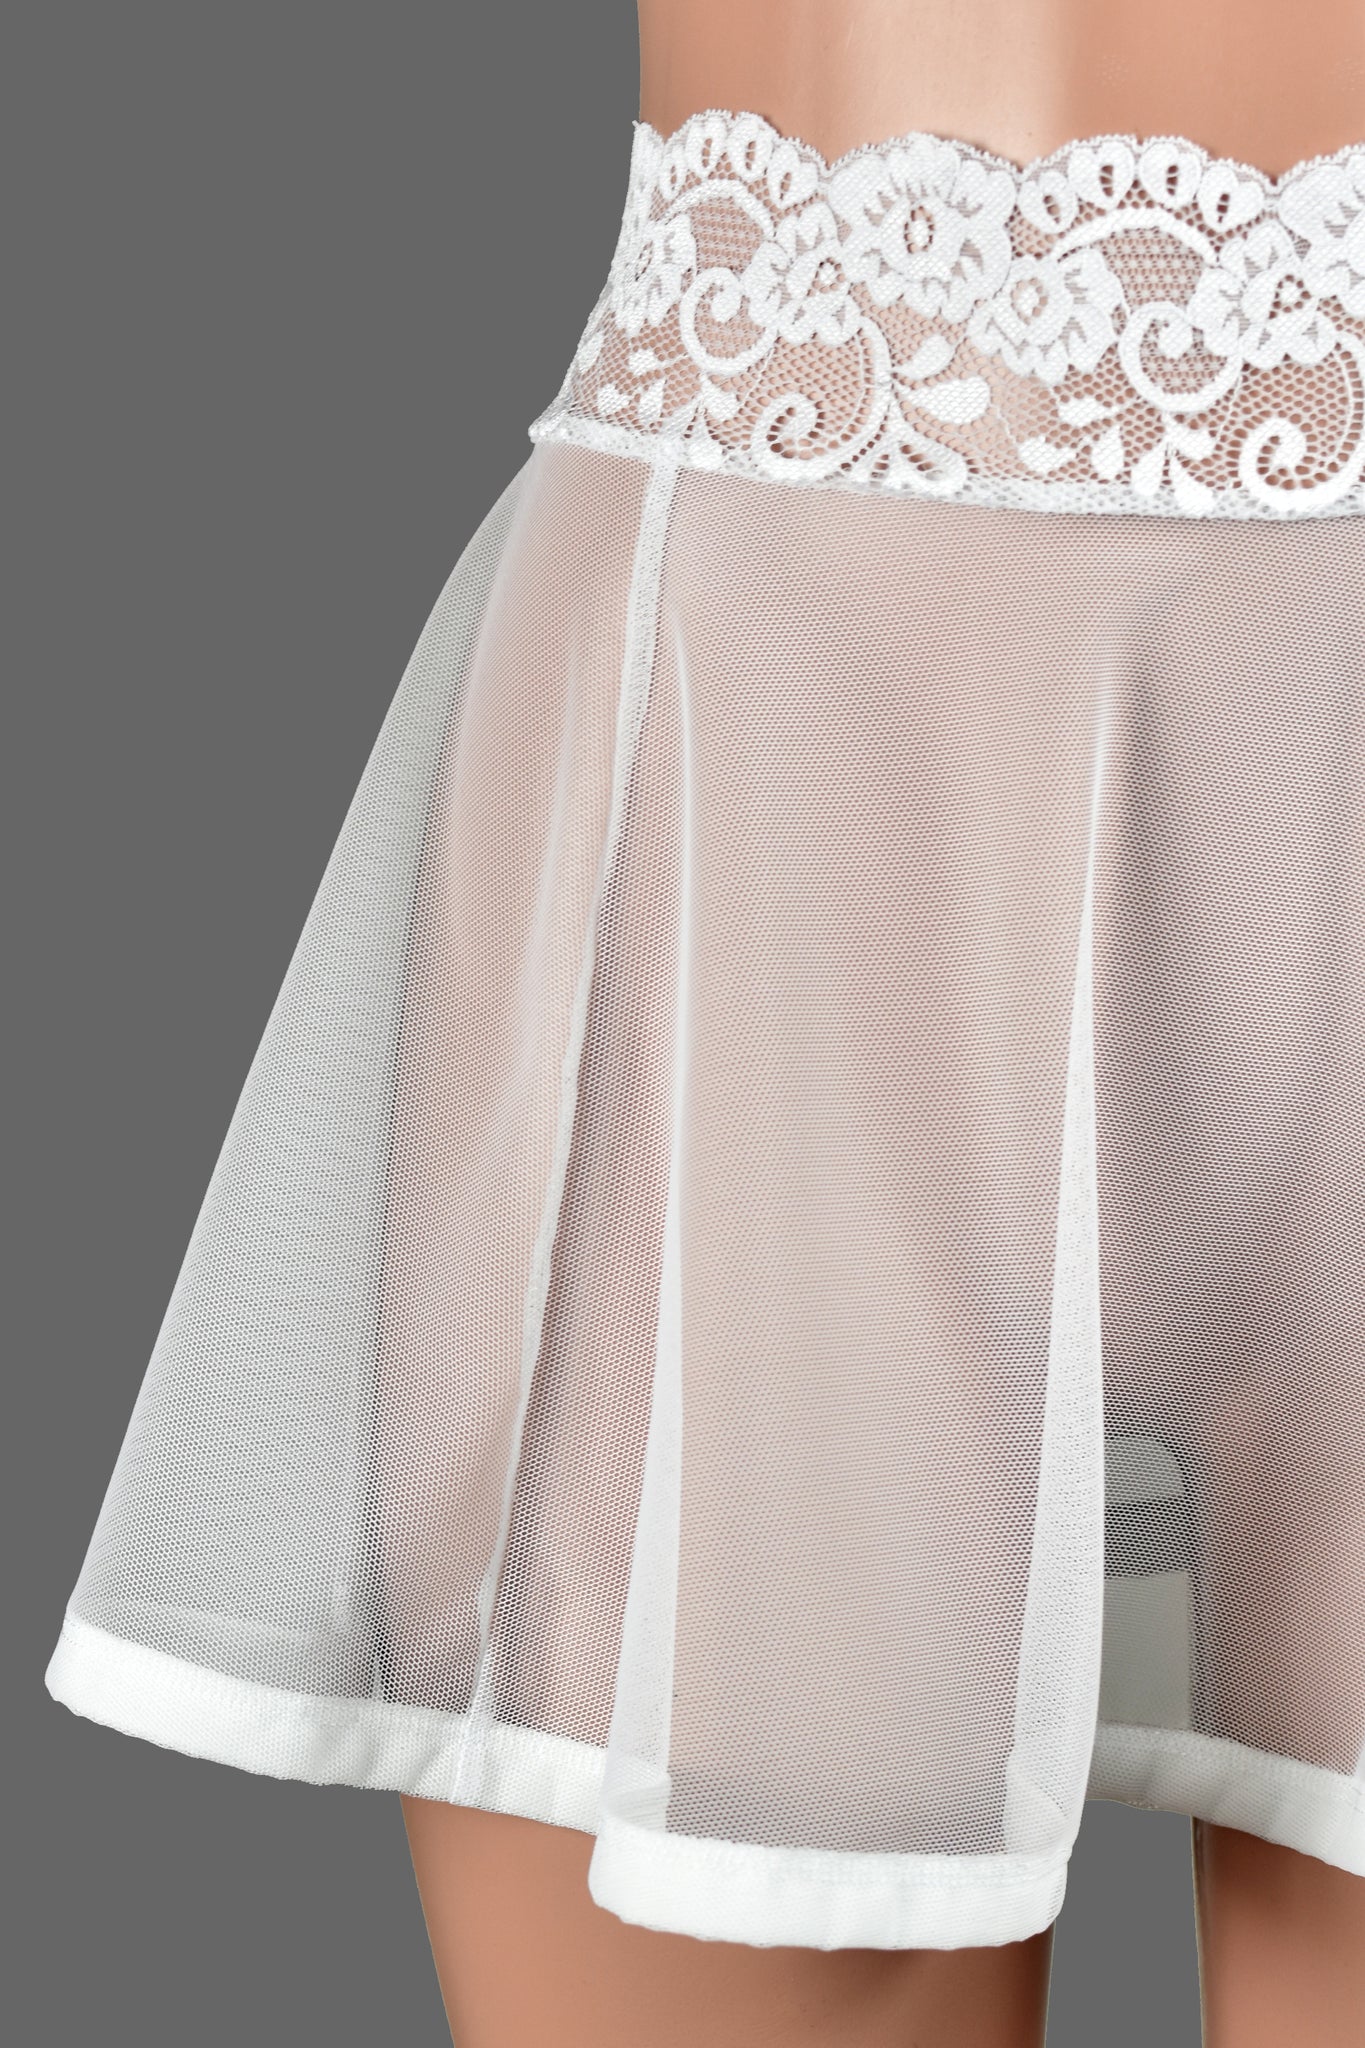 14 White Mesh Mini Skirt Stretch Lace Sheer Skirt Lingerie Xs To 3xl Plus Size Deranged Designs 5400